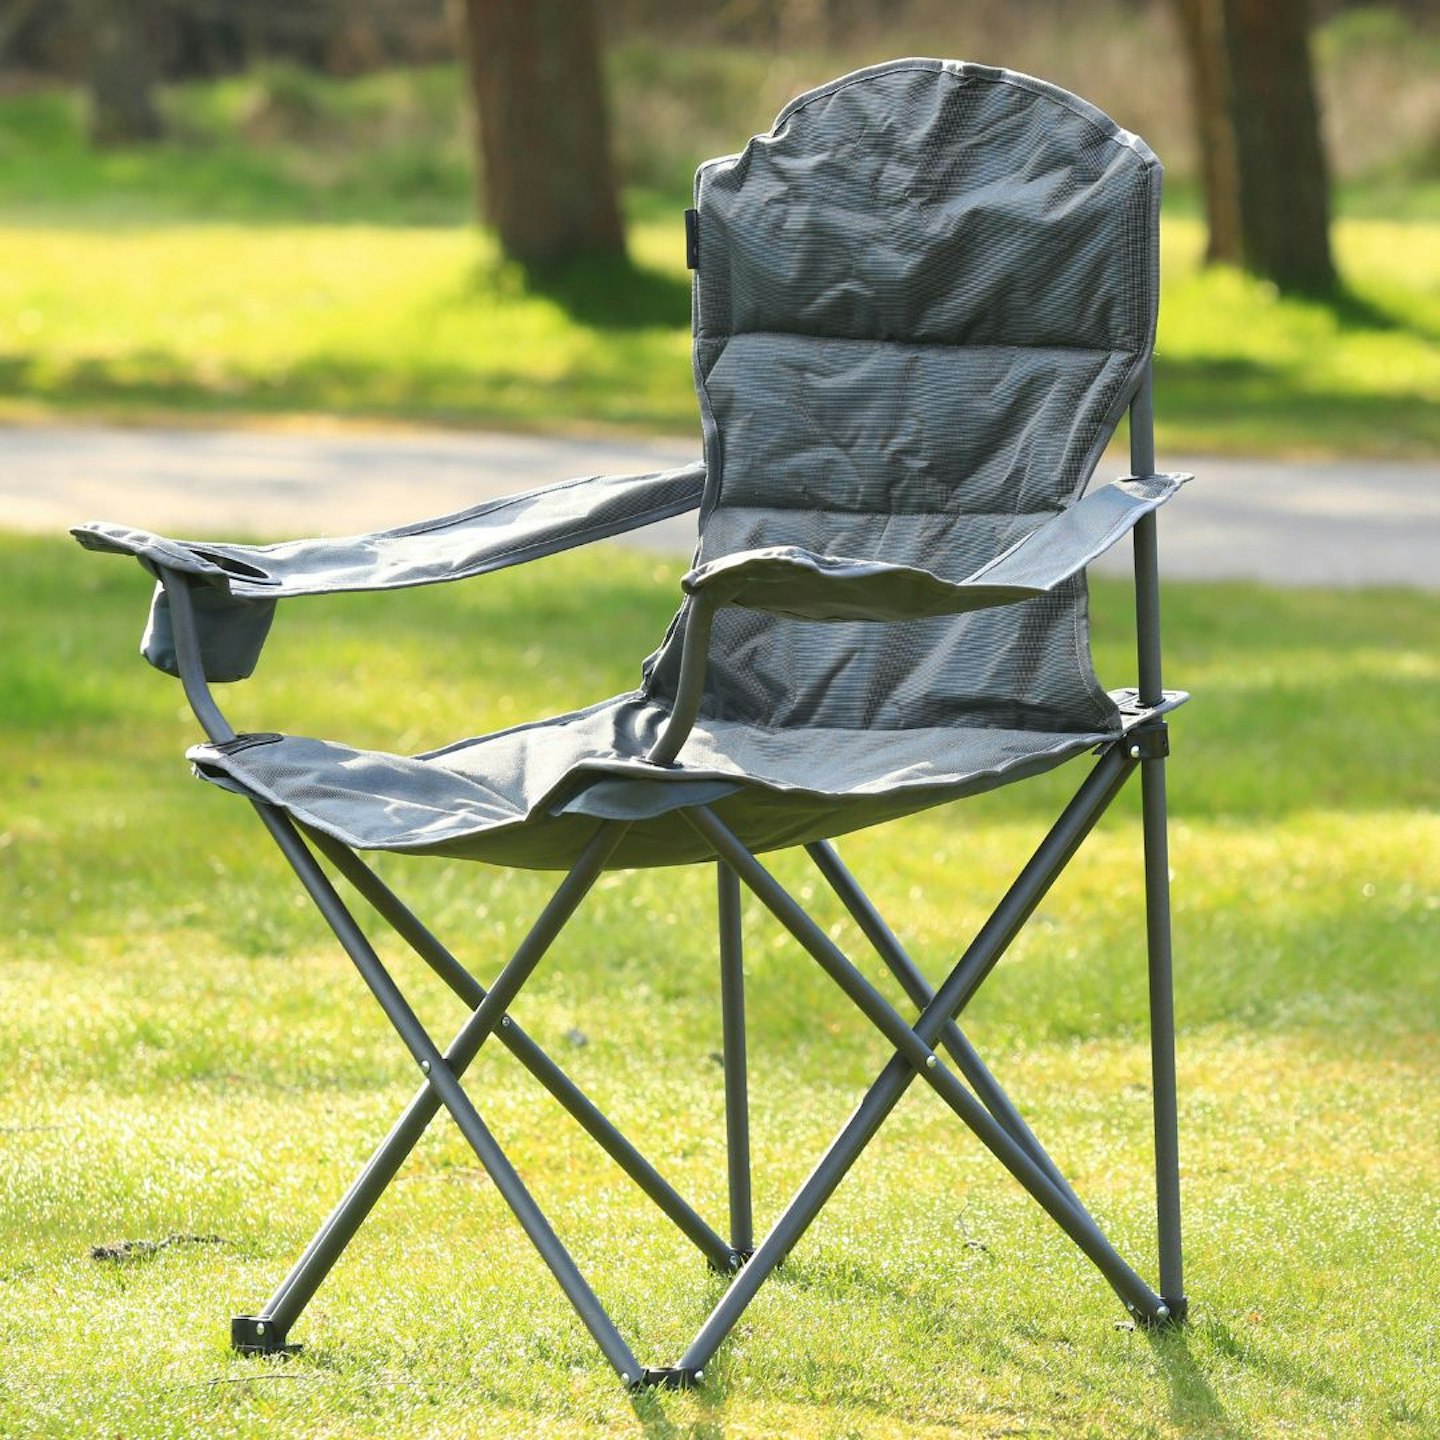 Vango Samson 2 Oversized Chair open on a campsite